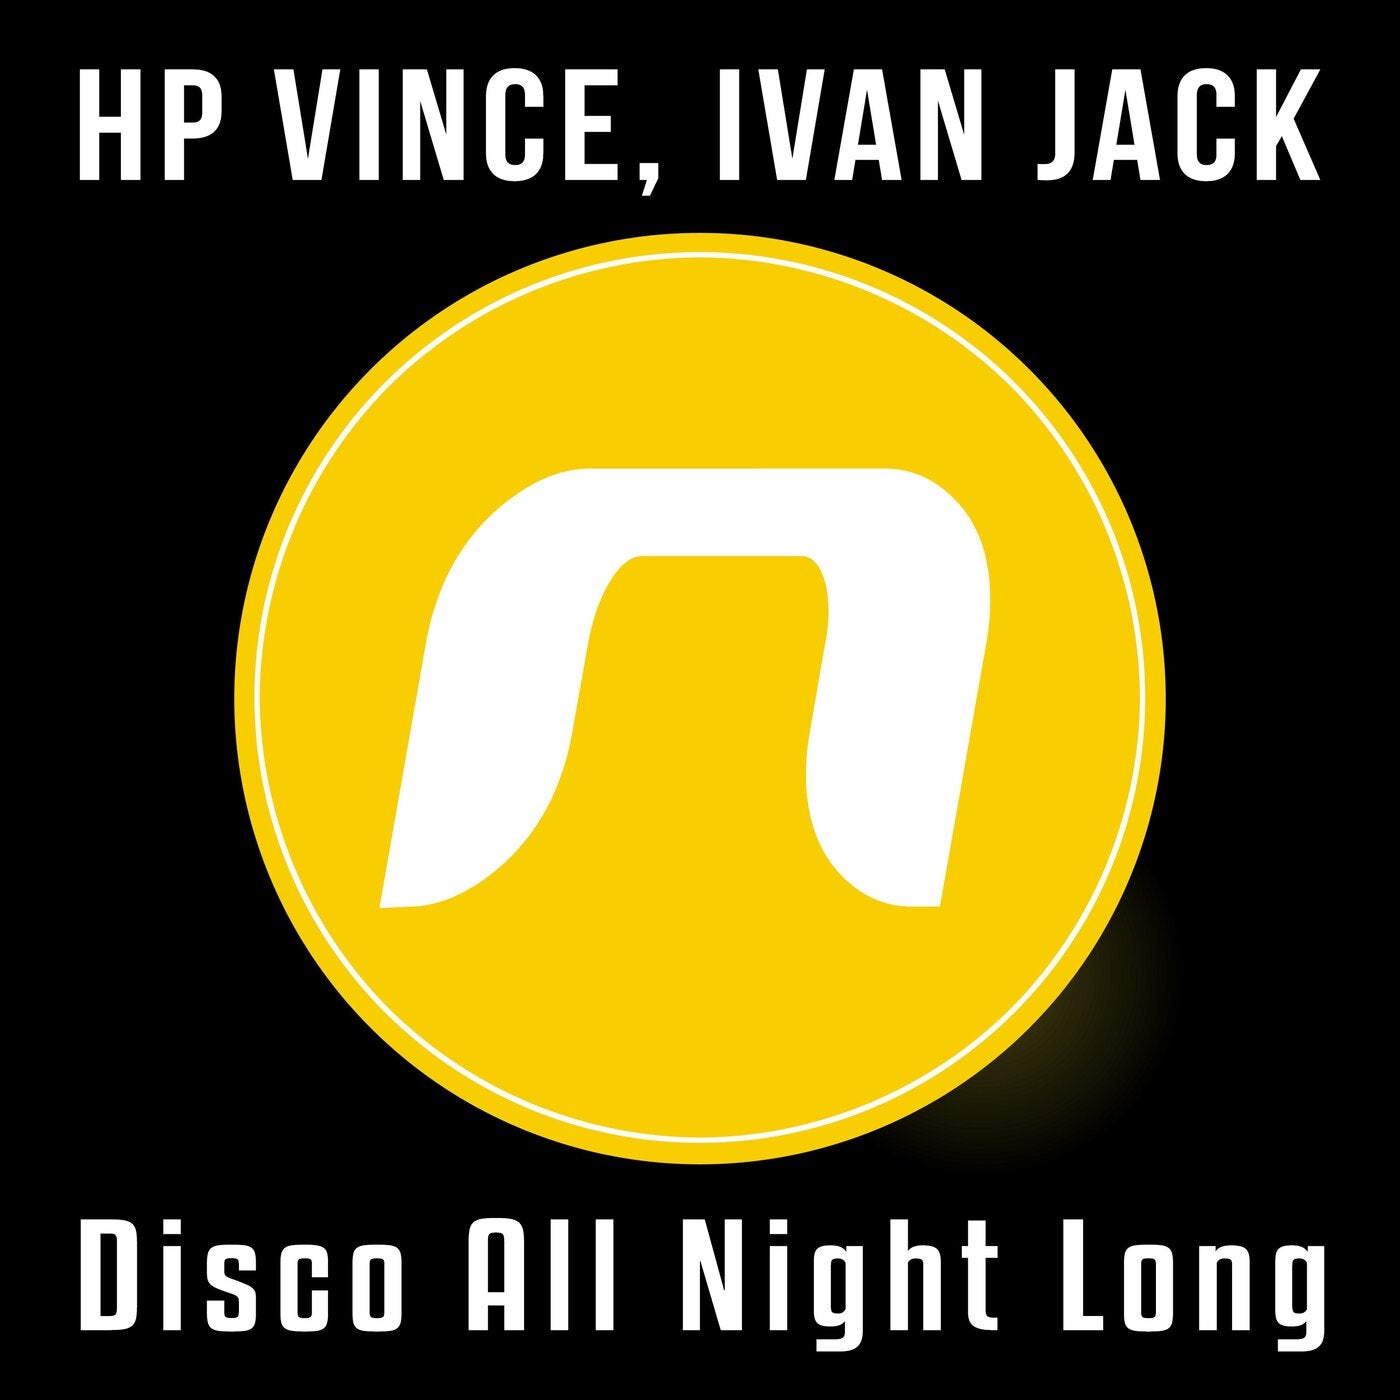 Disco All Night Long